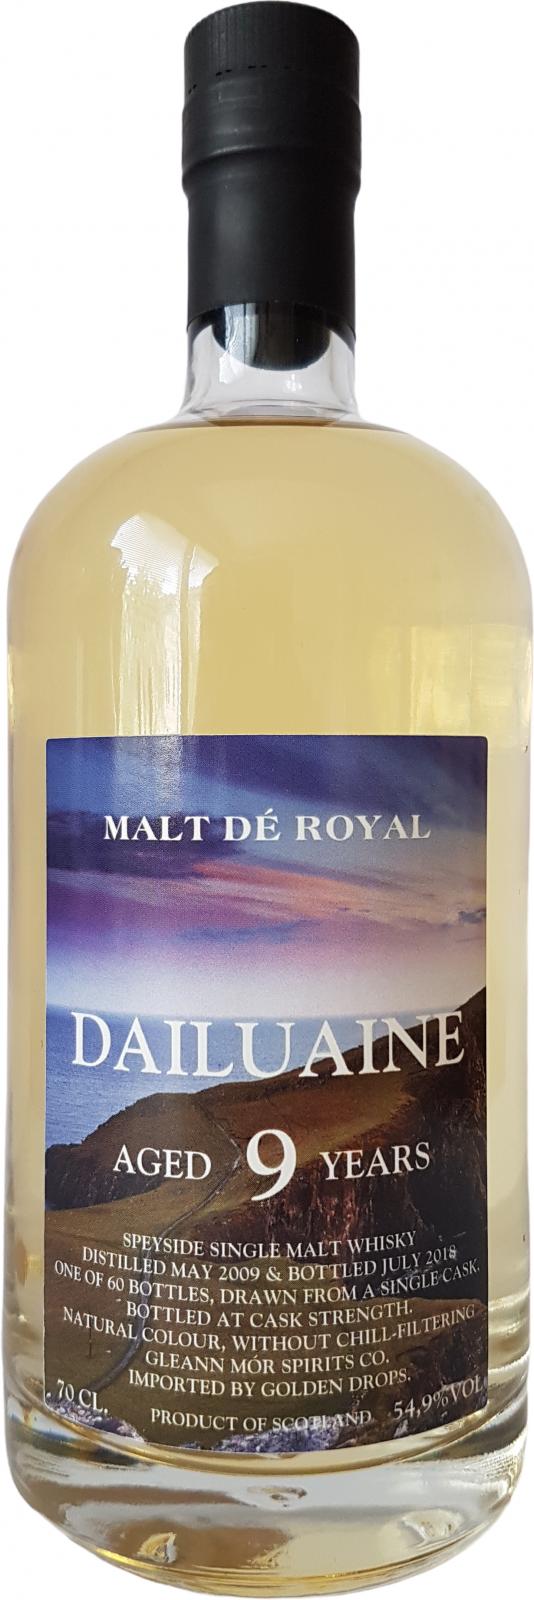 Dailuaine 2009 GlMo Malt de Royal Golden drops 54.9% 700ml